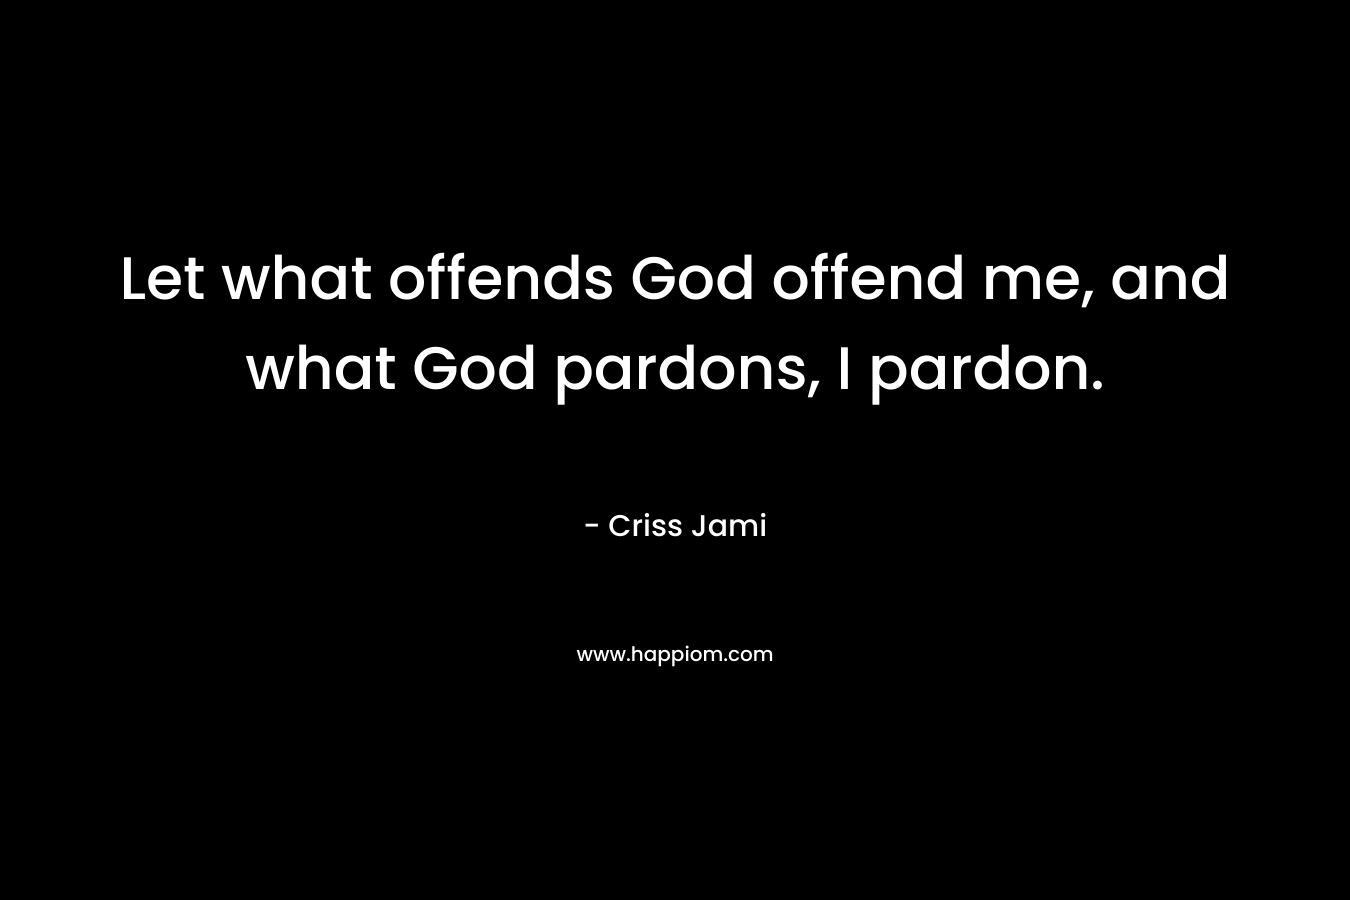 Let what offends God offend me, and what God pardons, I pardon. – Criss Jami